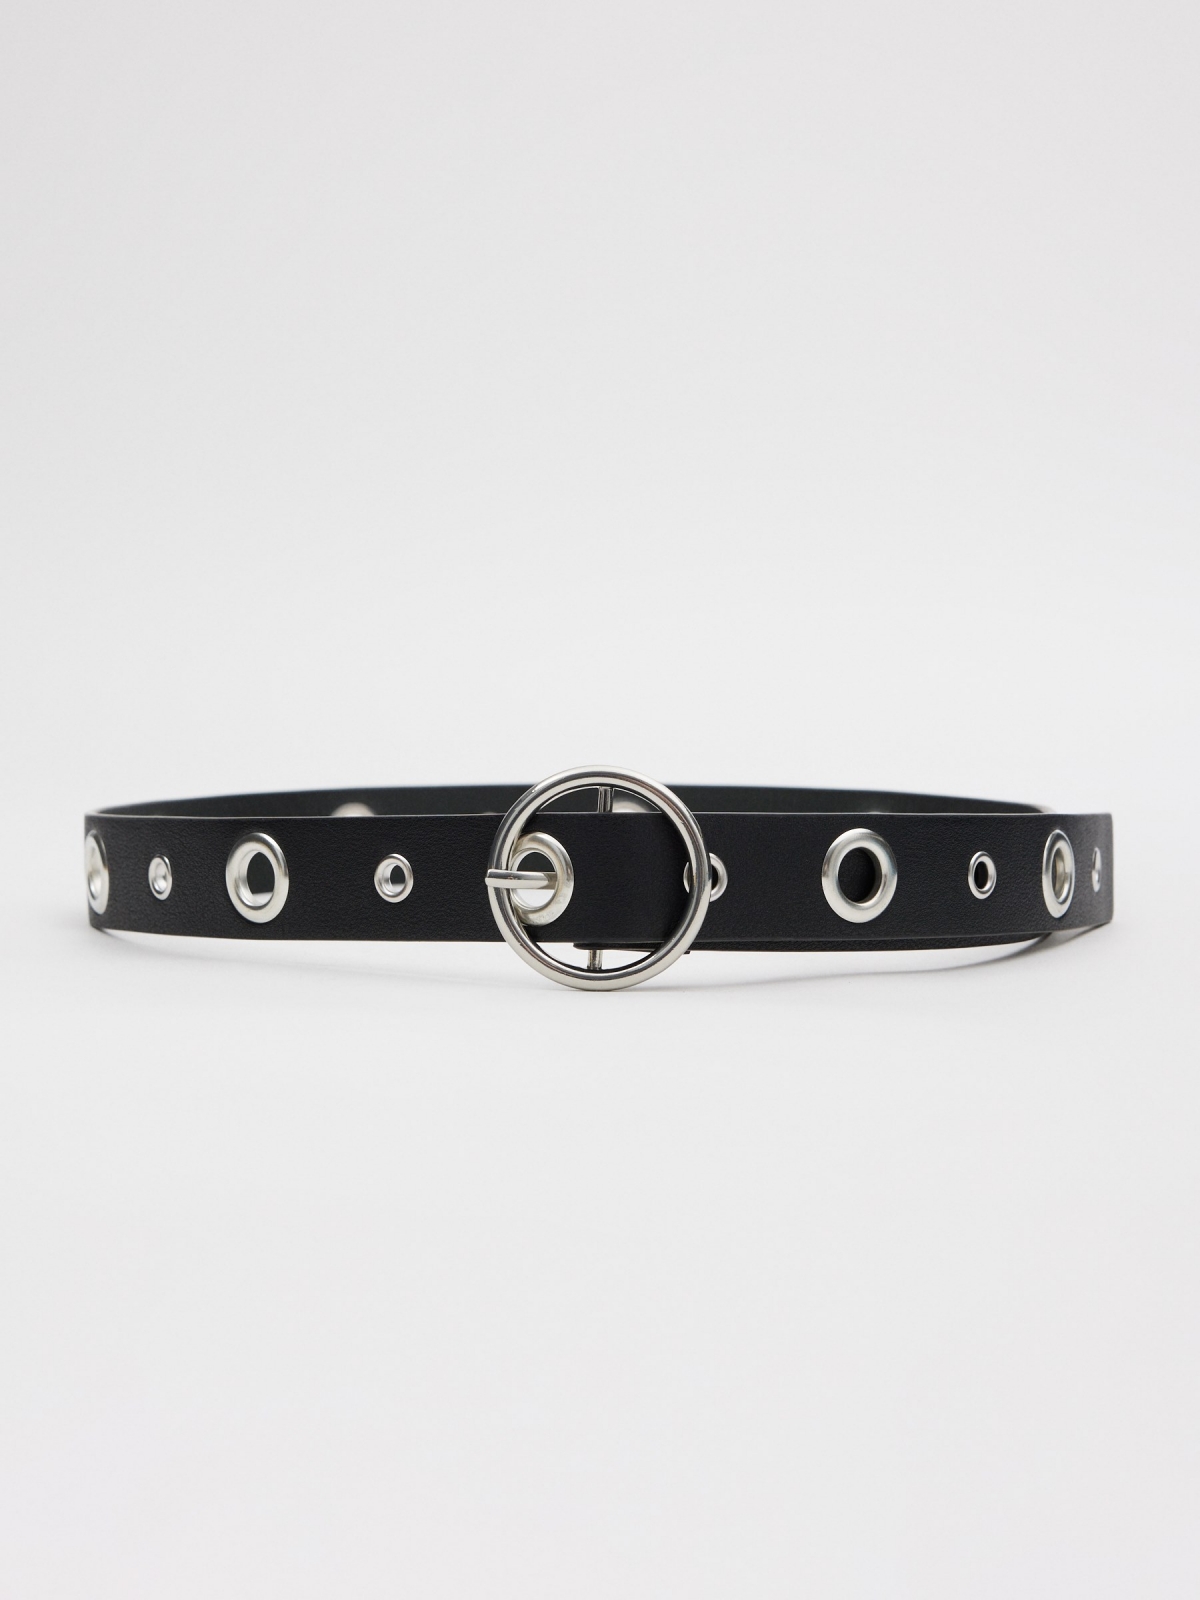 Studded round buckle belt black detail view